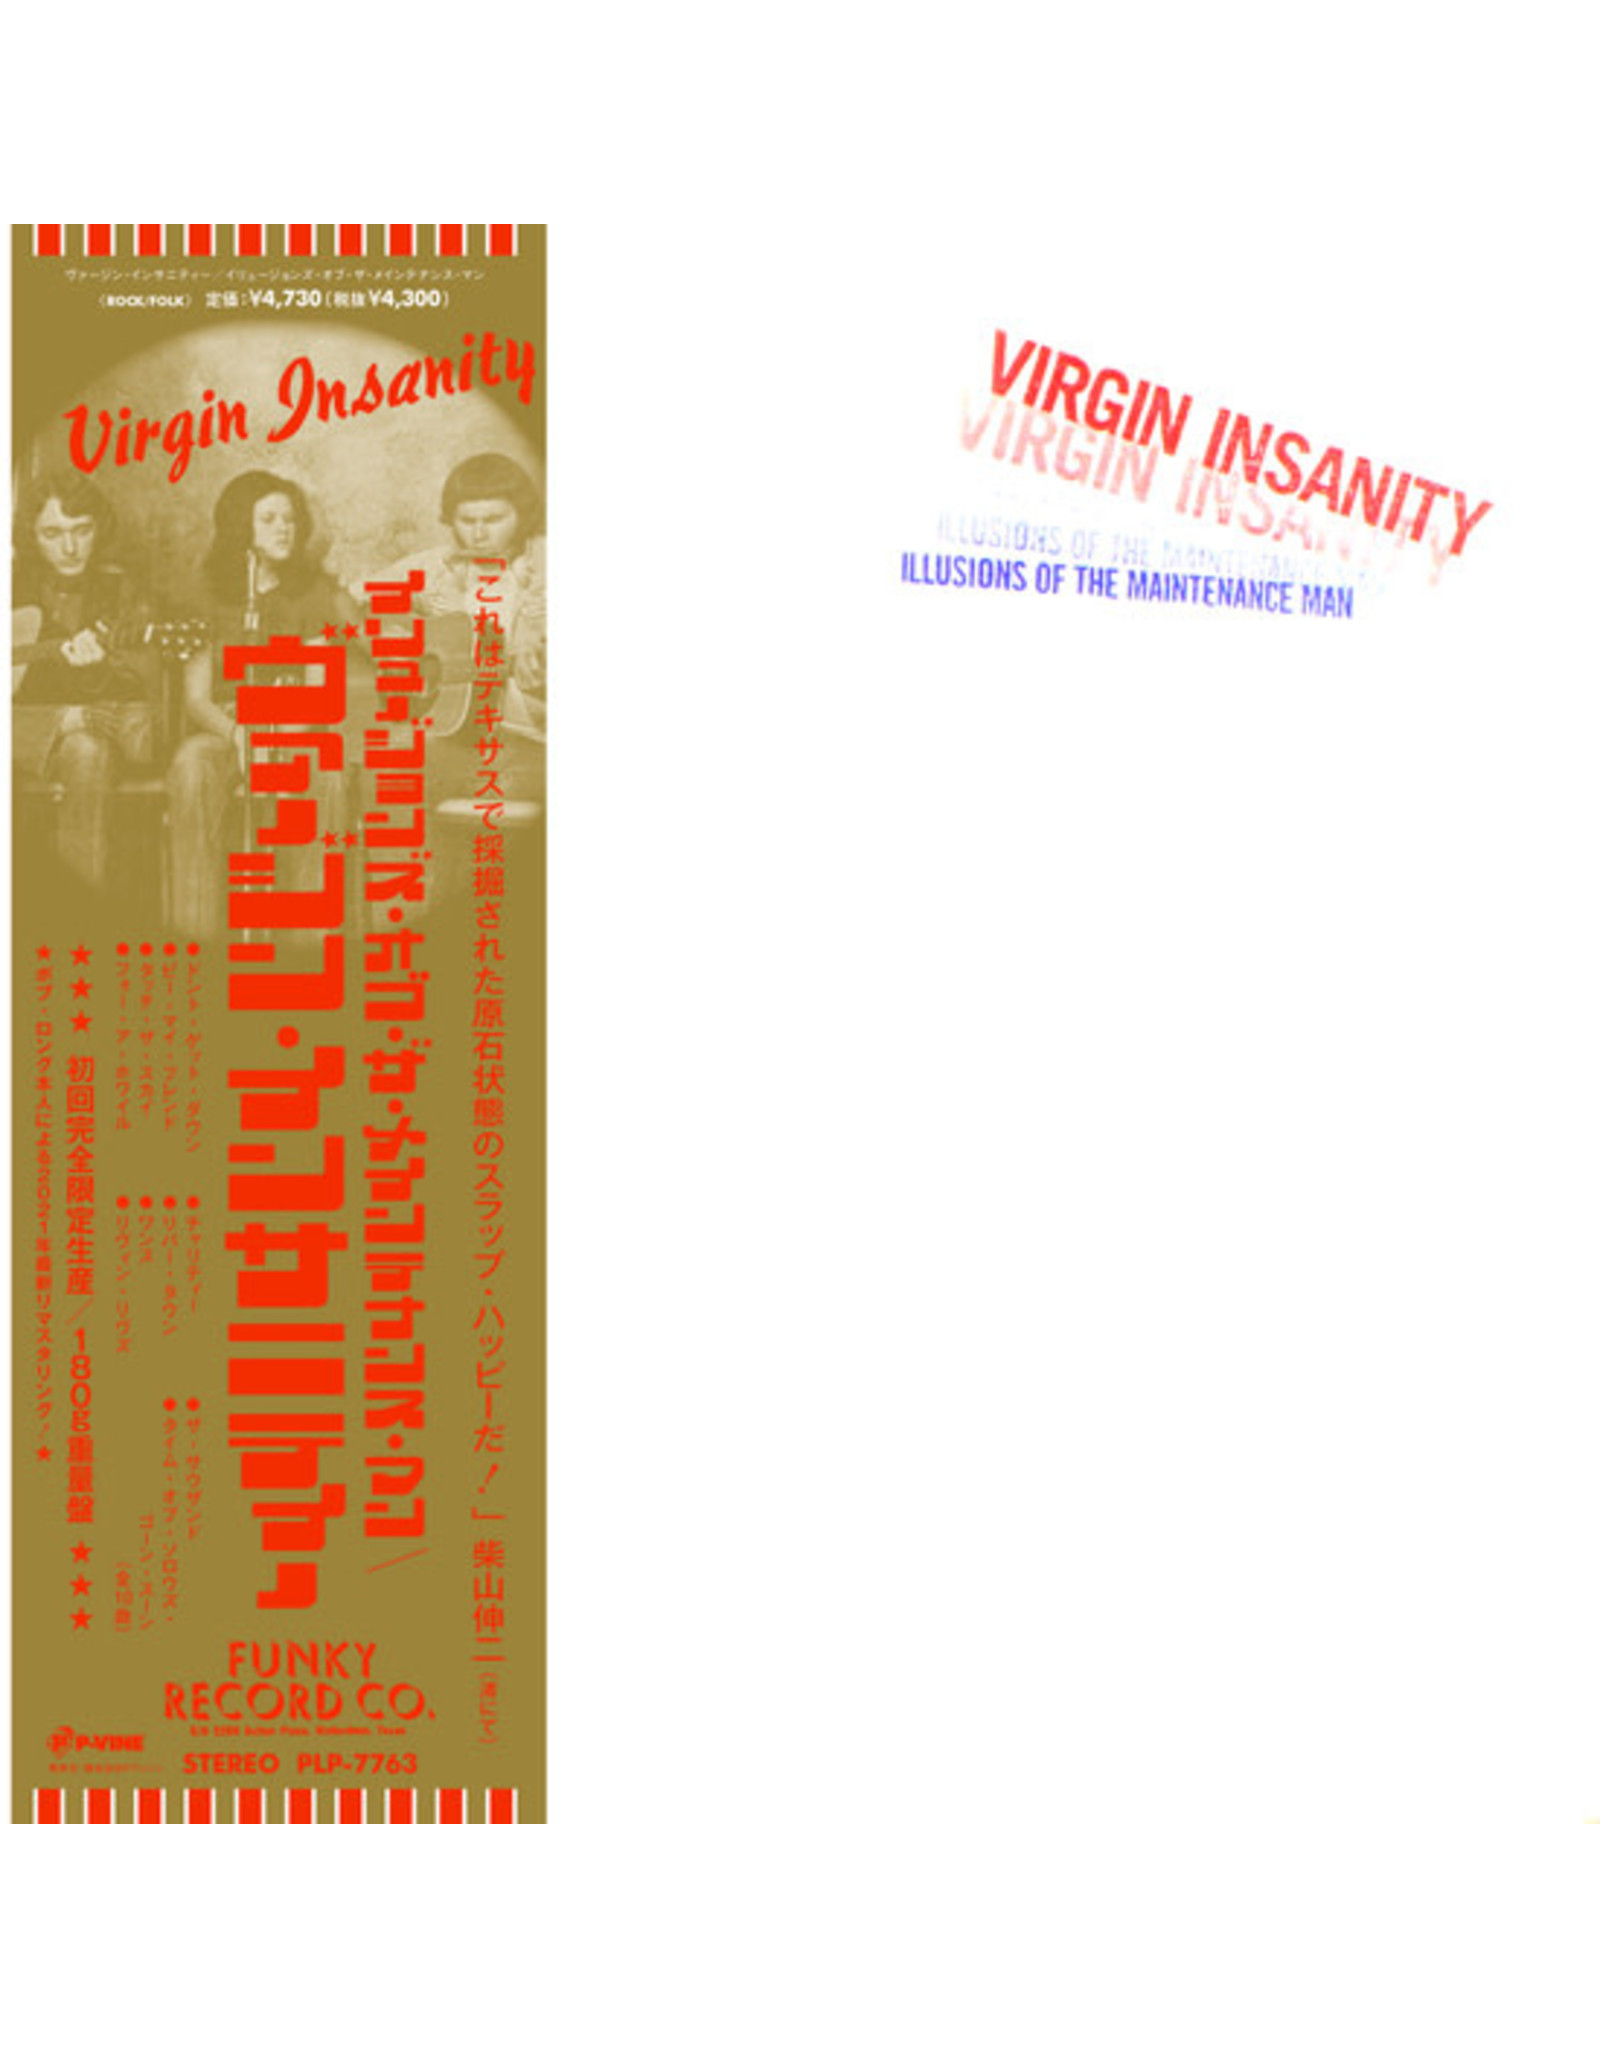 P-Vine Virgin Insanity: Illusion Of The Maintenance Man LP